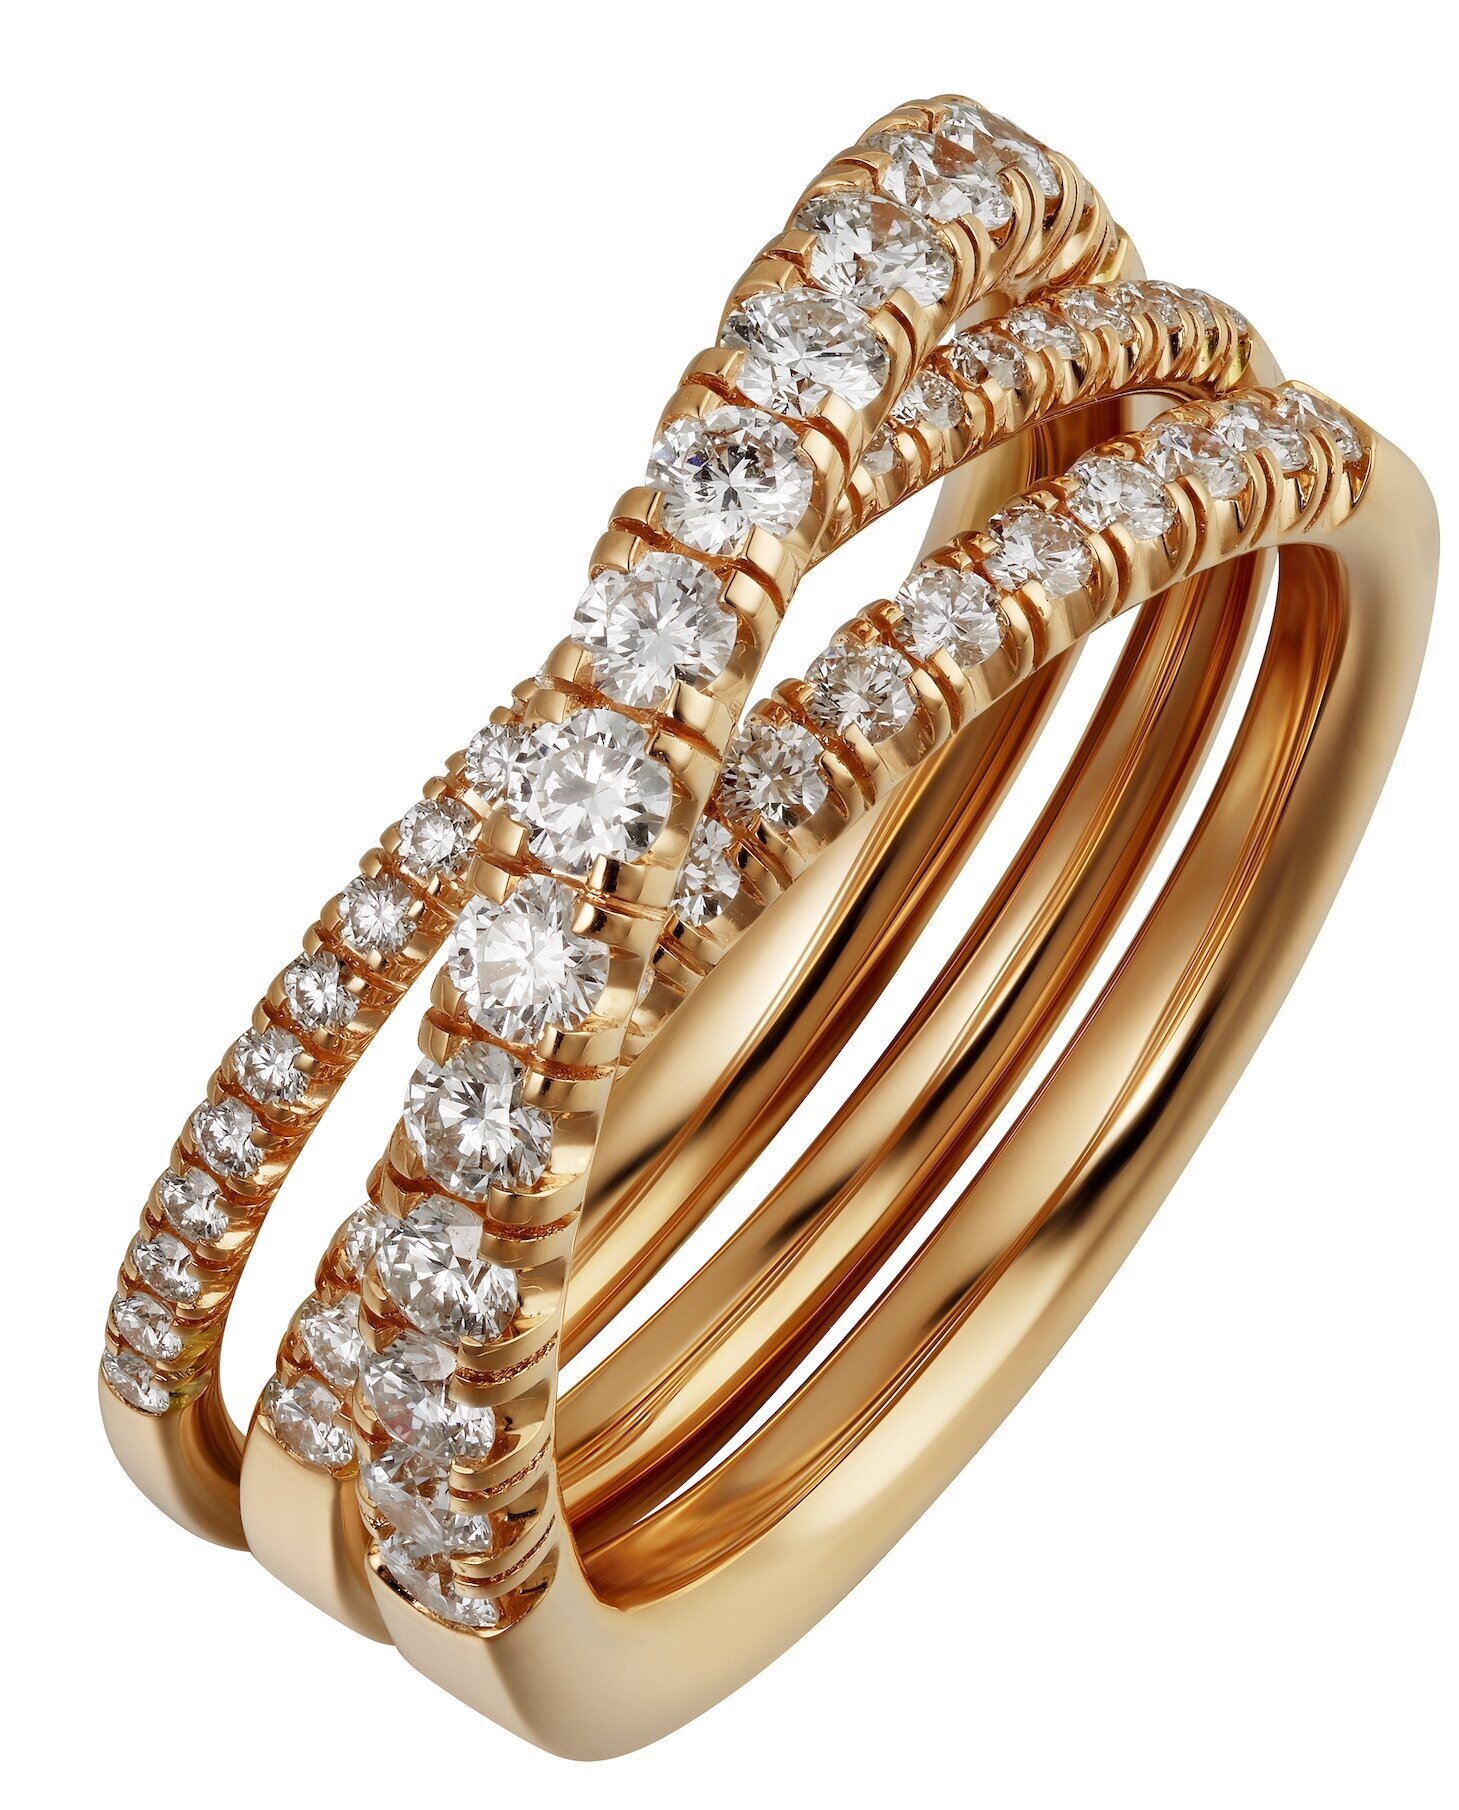  Étincelle de Cartier ring, 18k rose gold, diamonds, $9,100. Available at Cartier boutiques nationwide. For more information please visit  www.cartier.com  or contact 1-800-CARTIER.  &nbsp; 